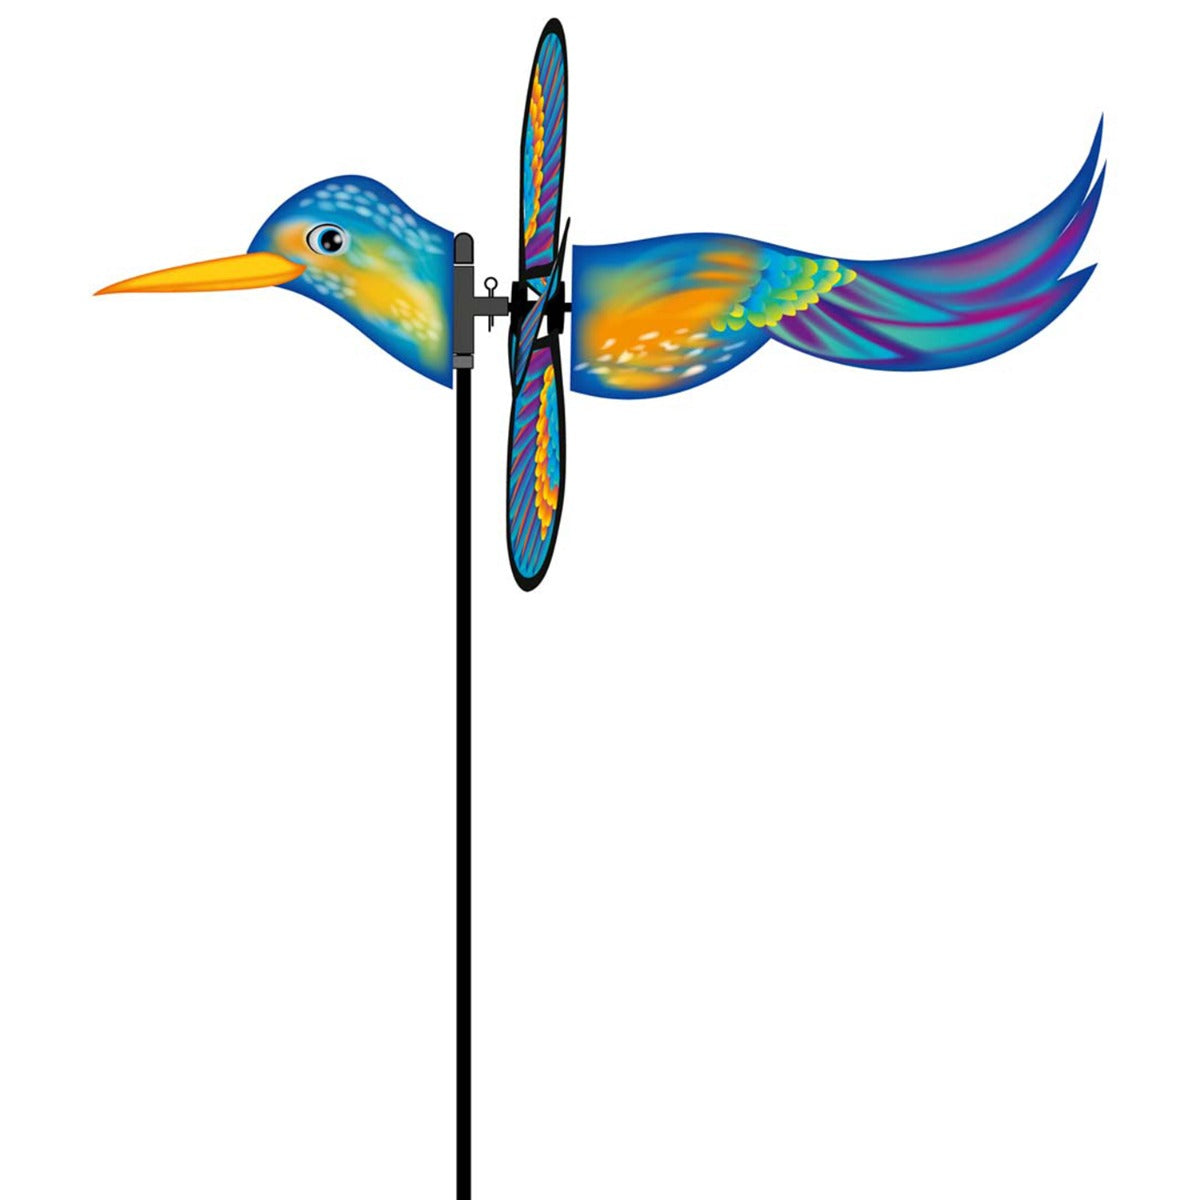 Windrad Windspiel HQ Spin Critter Kingfisher Gartendeko Propeller